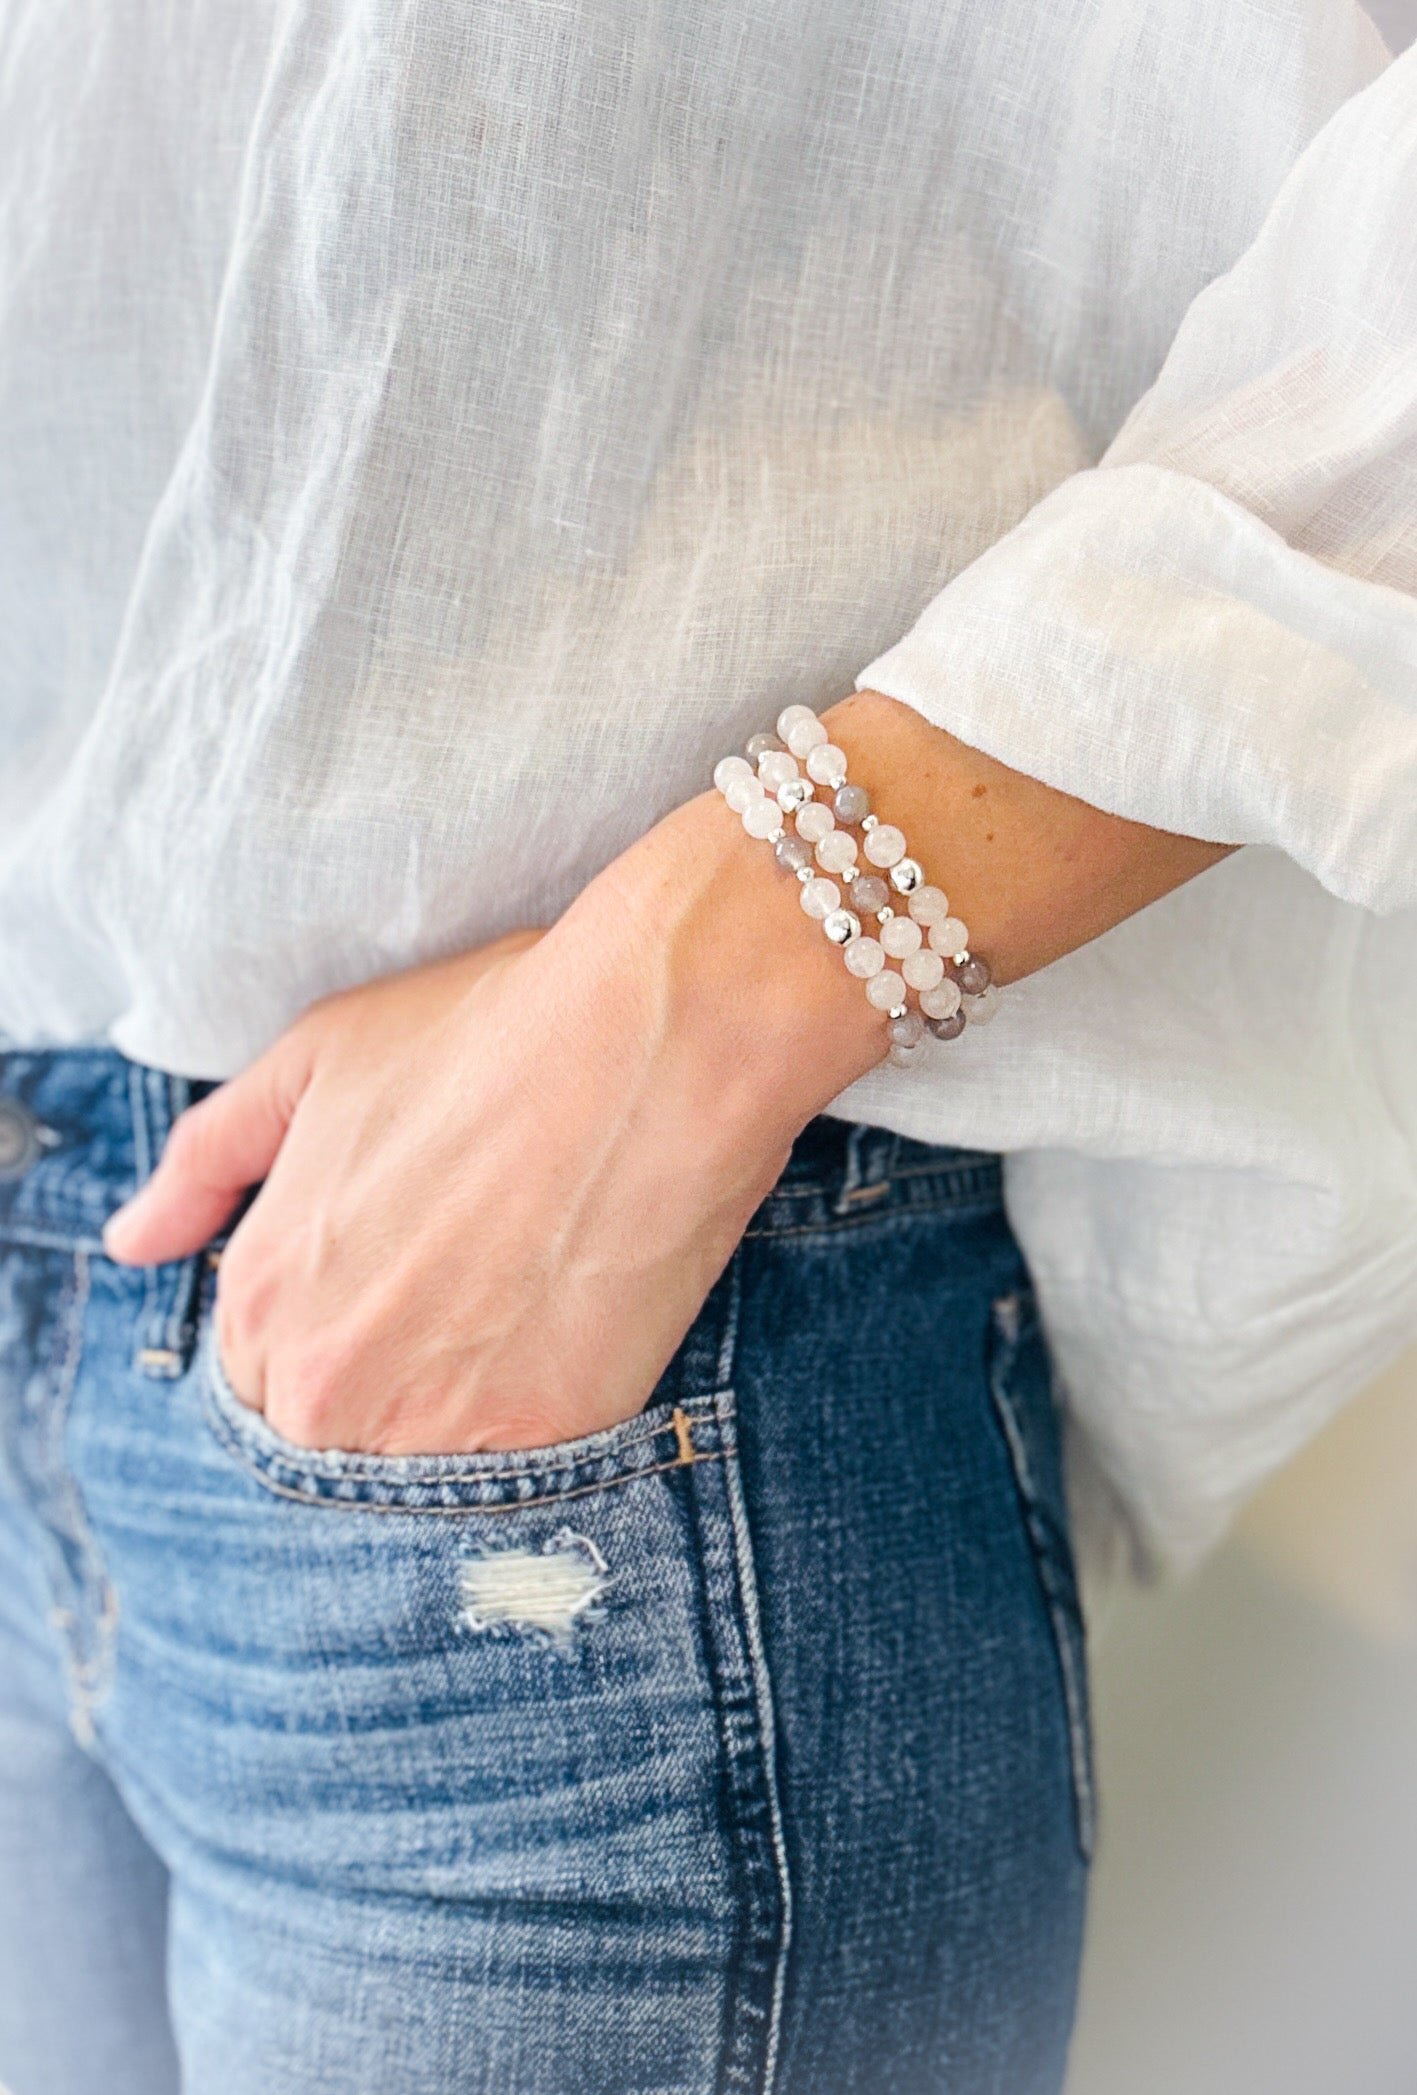 white jade healing gemstone bracelets canada